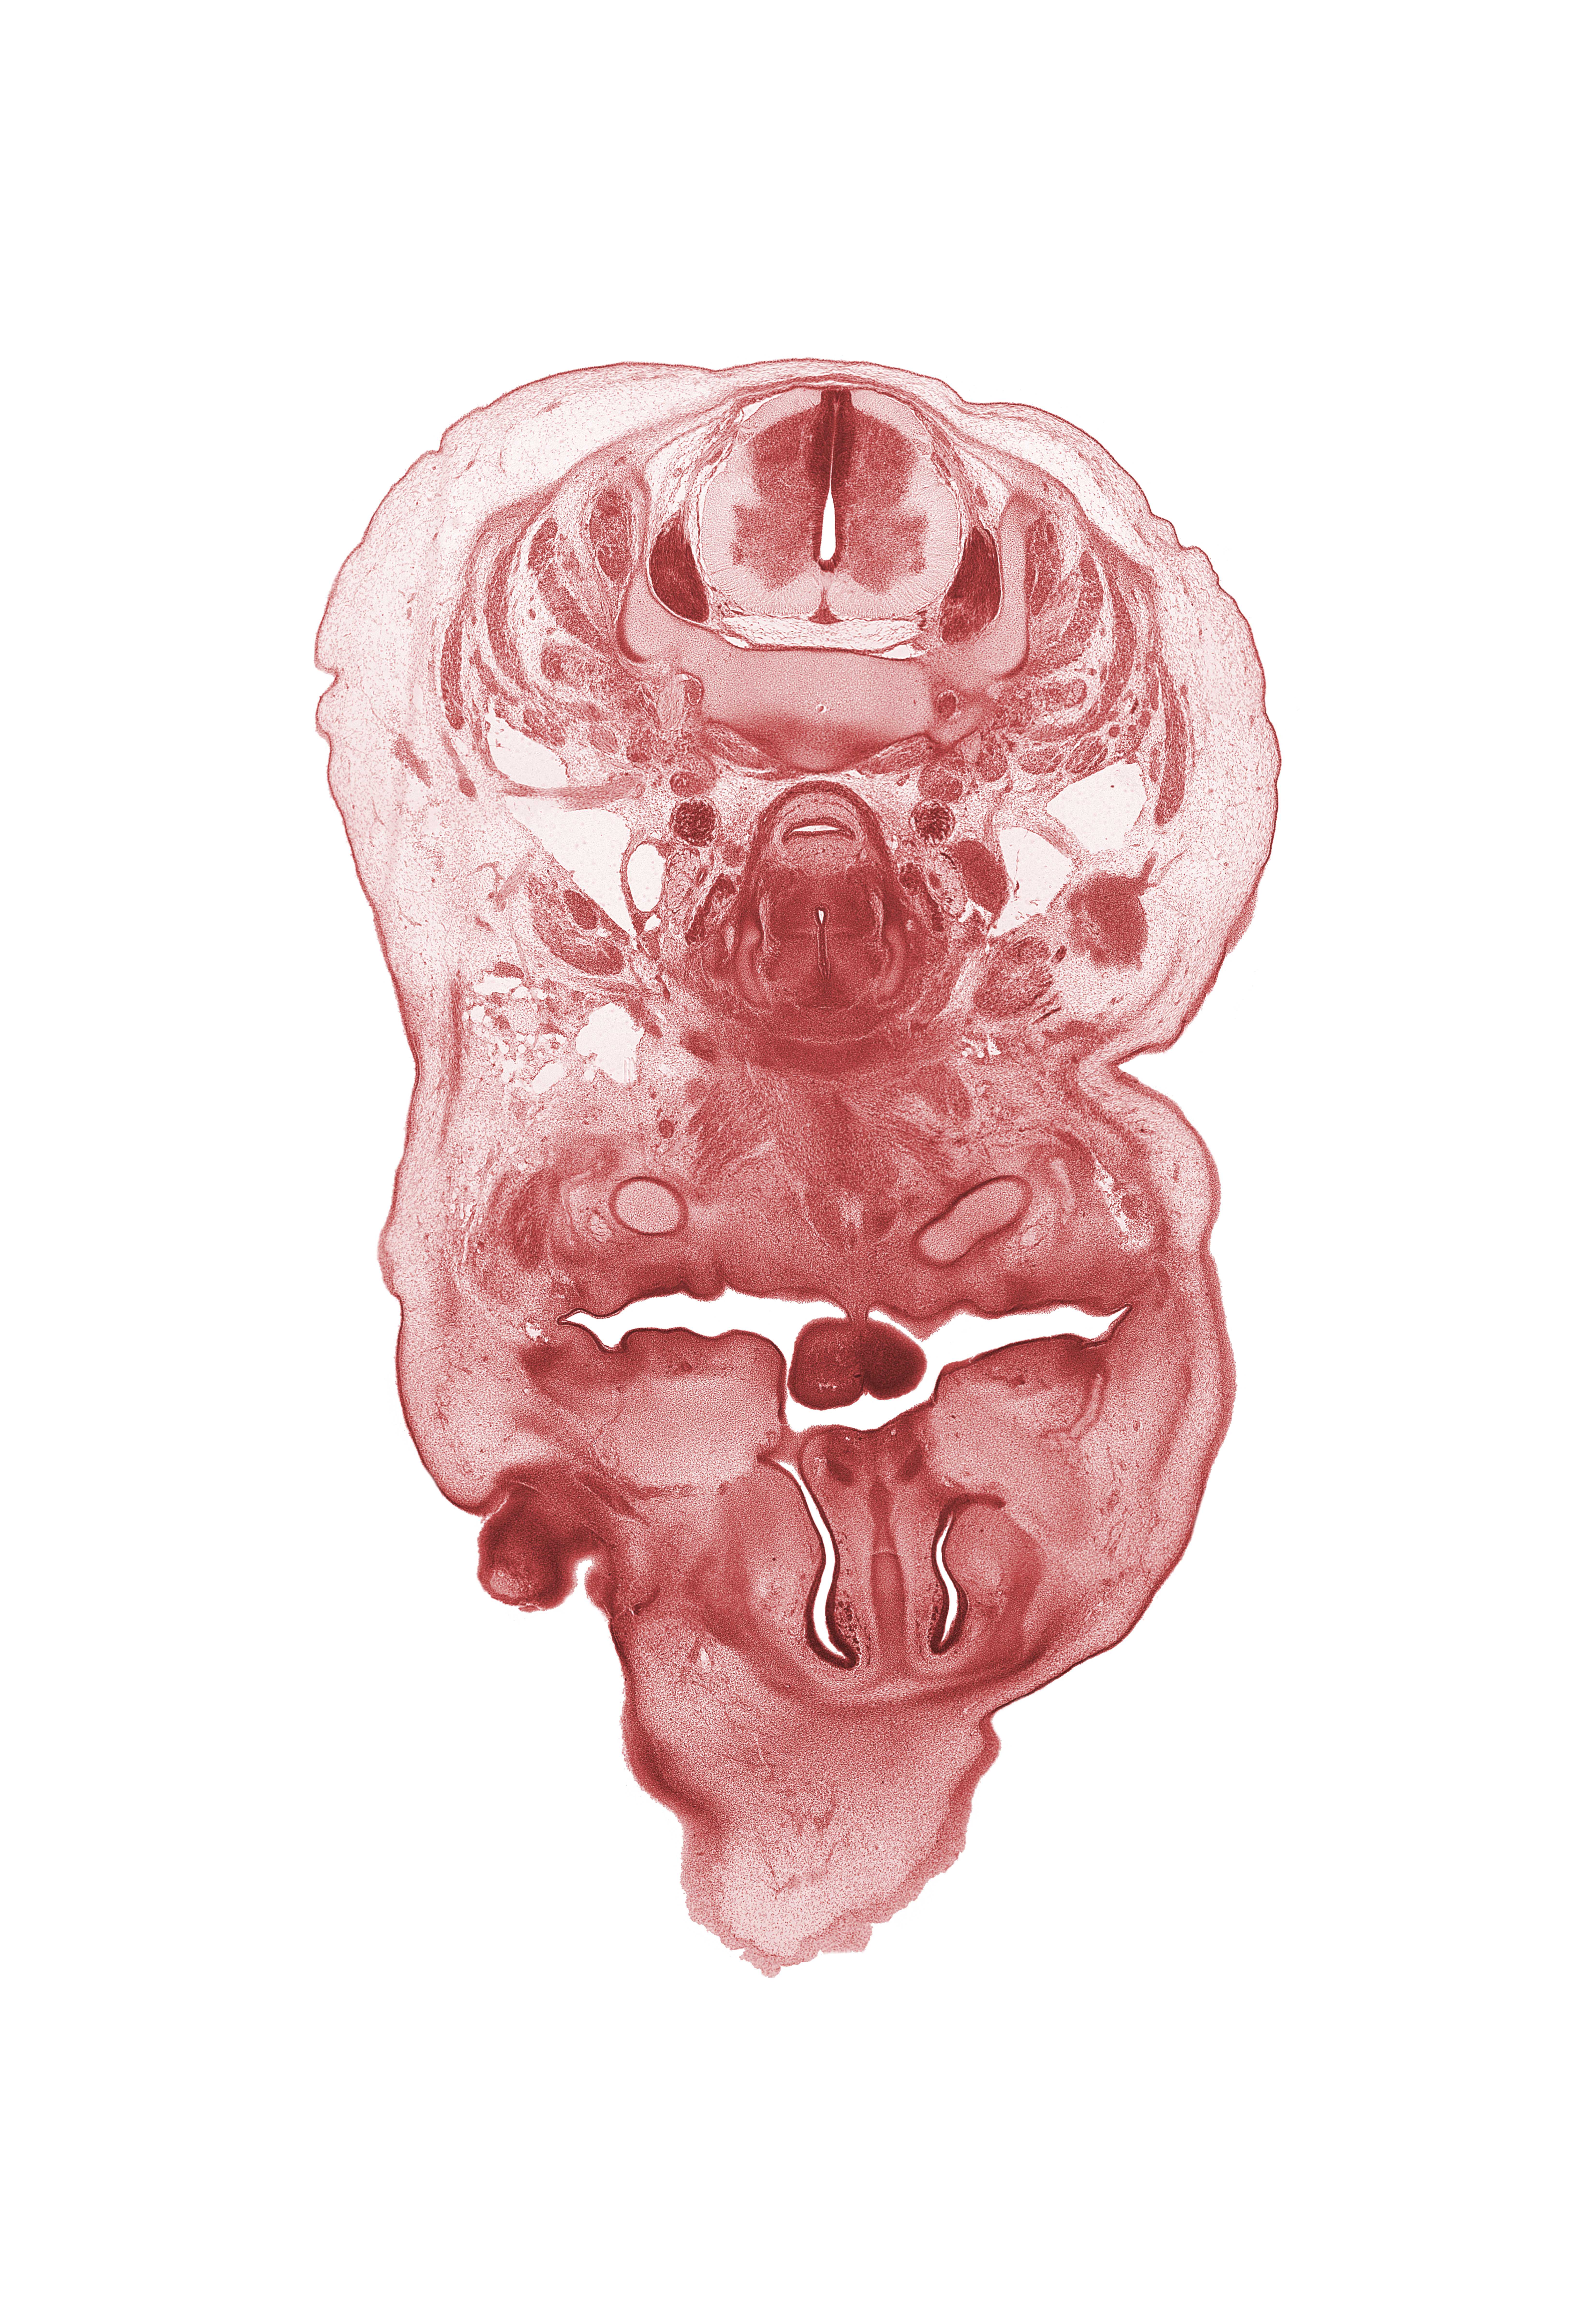 C-5 spinal ganglion, anterior spinal artery, caudal edge of eyeball, external jugular vein, frenulum of tongue, internal carotid artery, interorbital ligament, jugular lymph sac, laryngeal condensation, longus cervicis muscle, nasal capsule, nasal cavity (nasal sac), nasal septal cartilage, oral cavity, pharyngeal arch 1 cartilage (Meckel), platysma muscle, semispinalis capitis muscle, semispinalis cervicis muscle, splenius muscle, sternocleidomastoid muscle, subarachnoid space, superior parathyroid gland, trapezius muscle